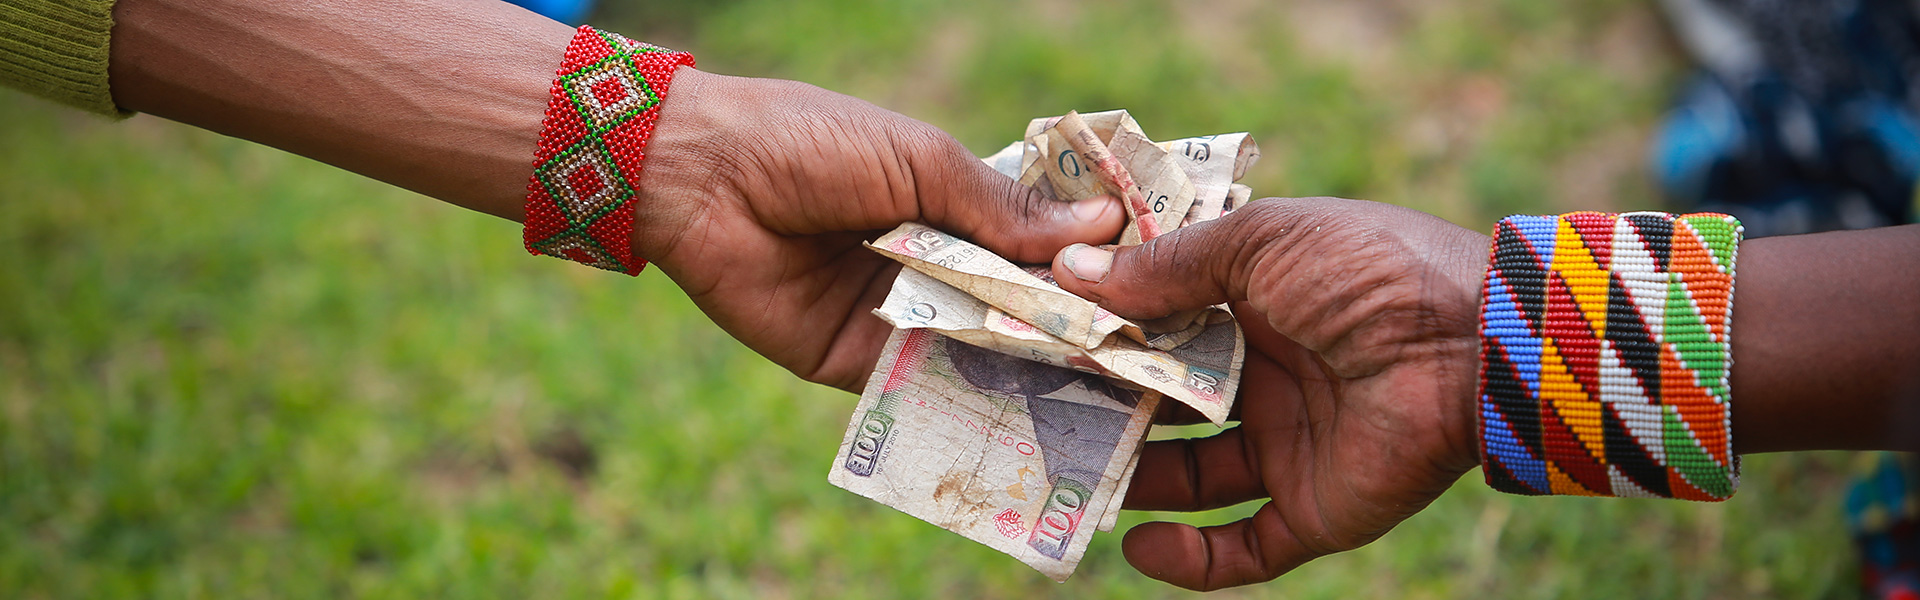 kenya-masai-savings-and-loan-groups-hands-money